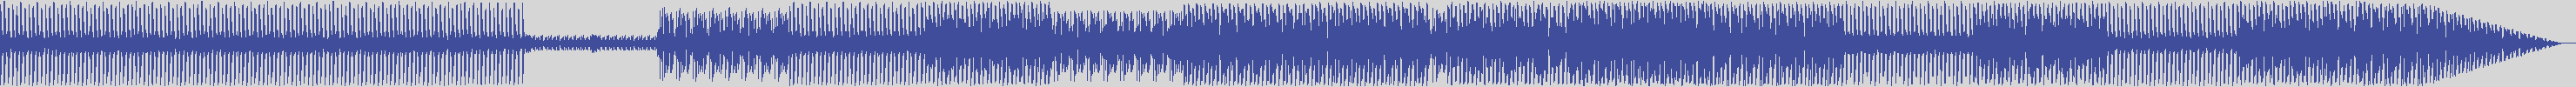 nf_boyz_records [NFY015] Dj Hiruka - Vanity [Tribal Mix] audio wave form